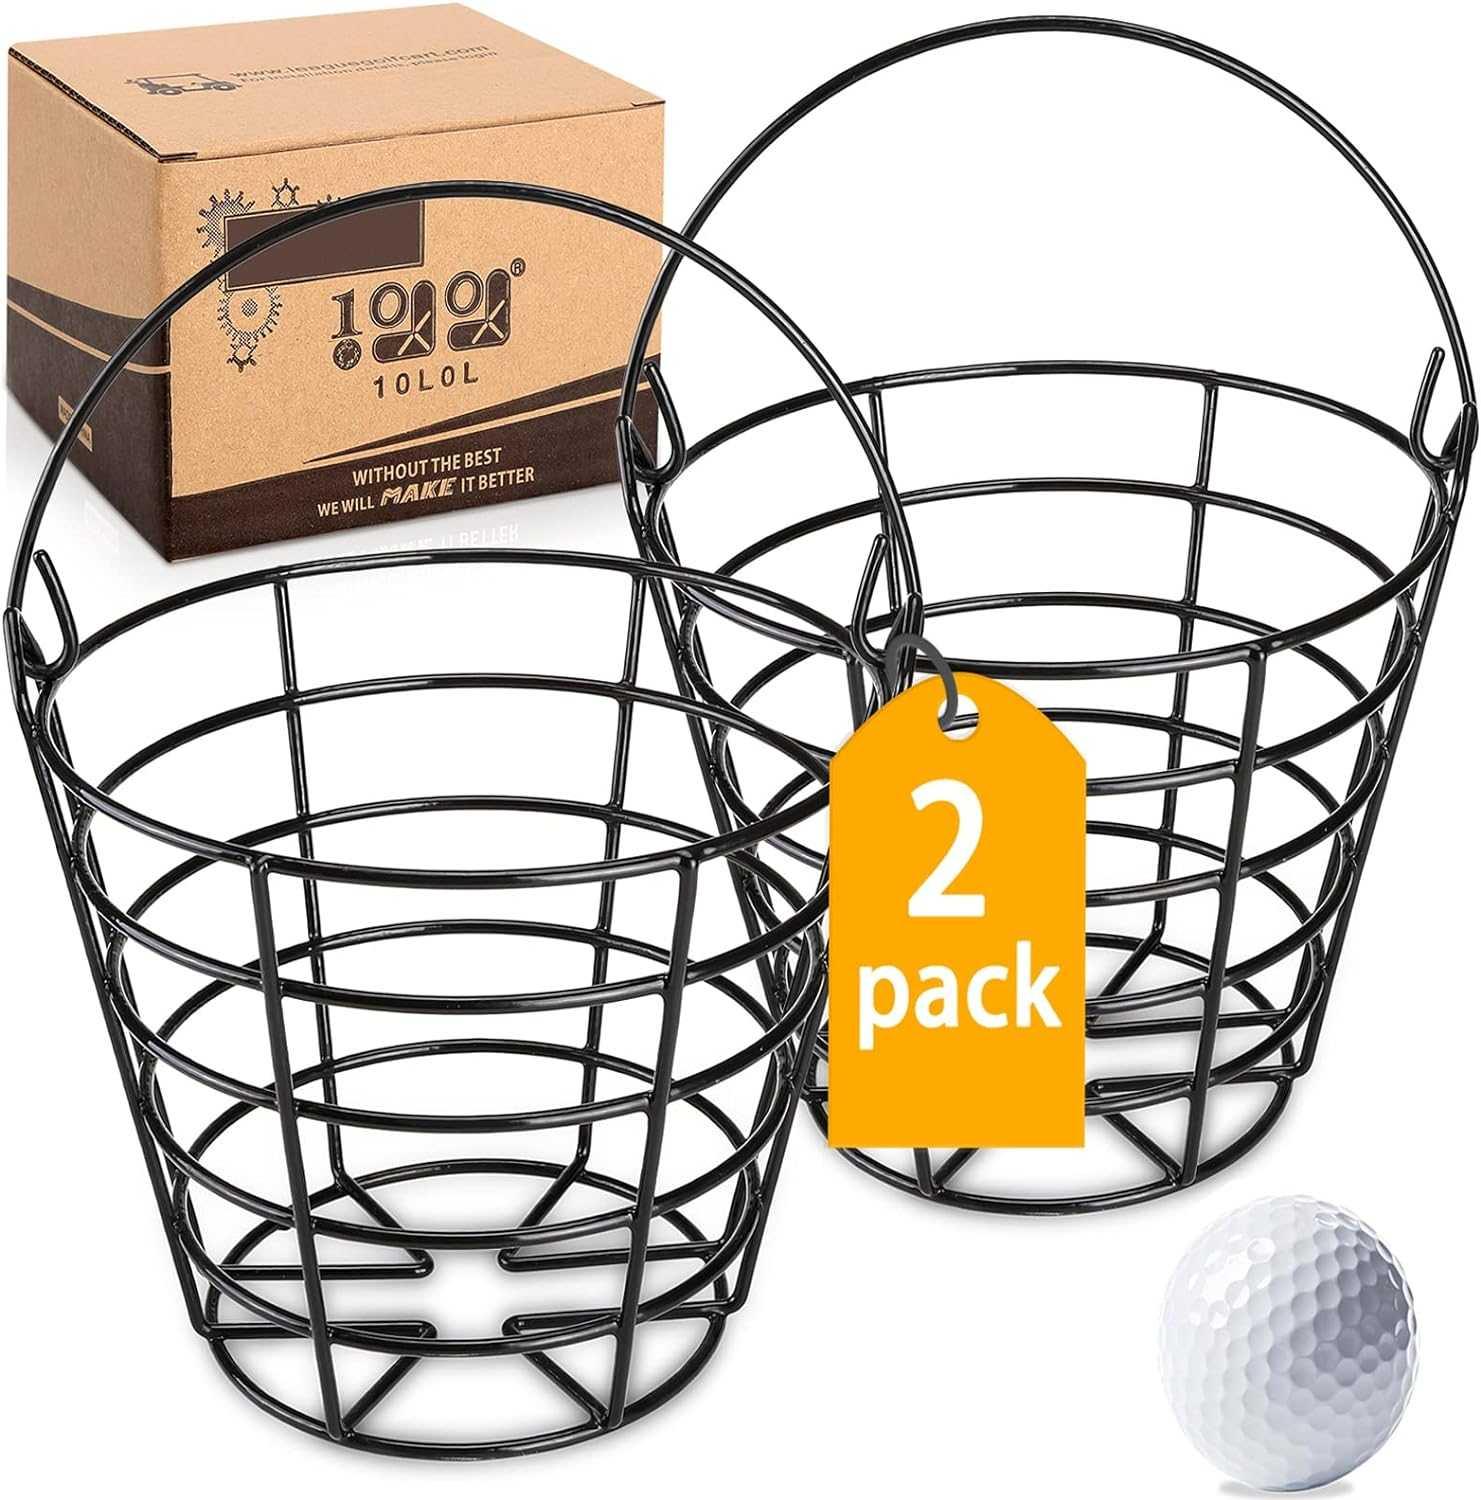 Golf ball bucket full body metal with handle can hold 50 golf balls - 10L0L Kryptex Golf Carts